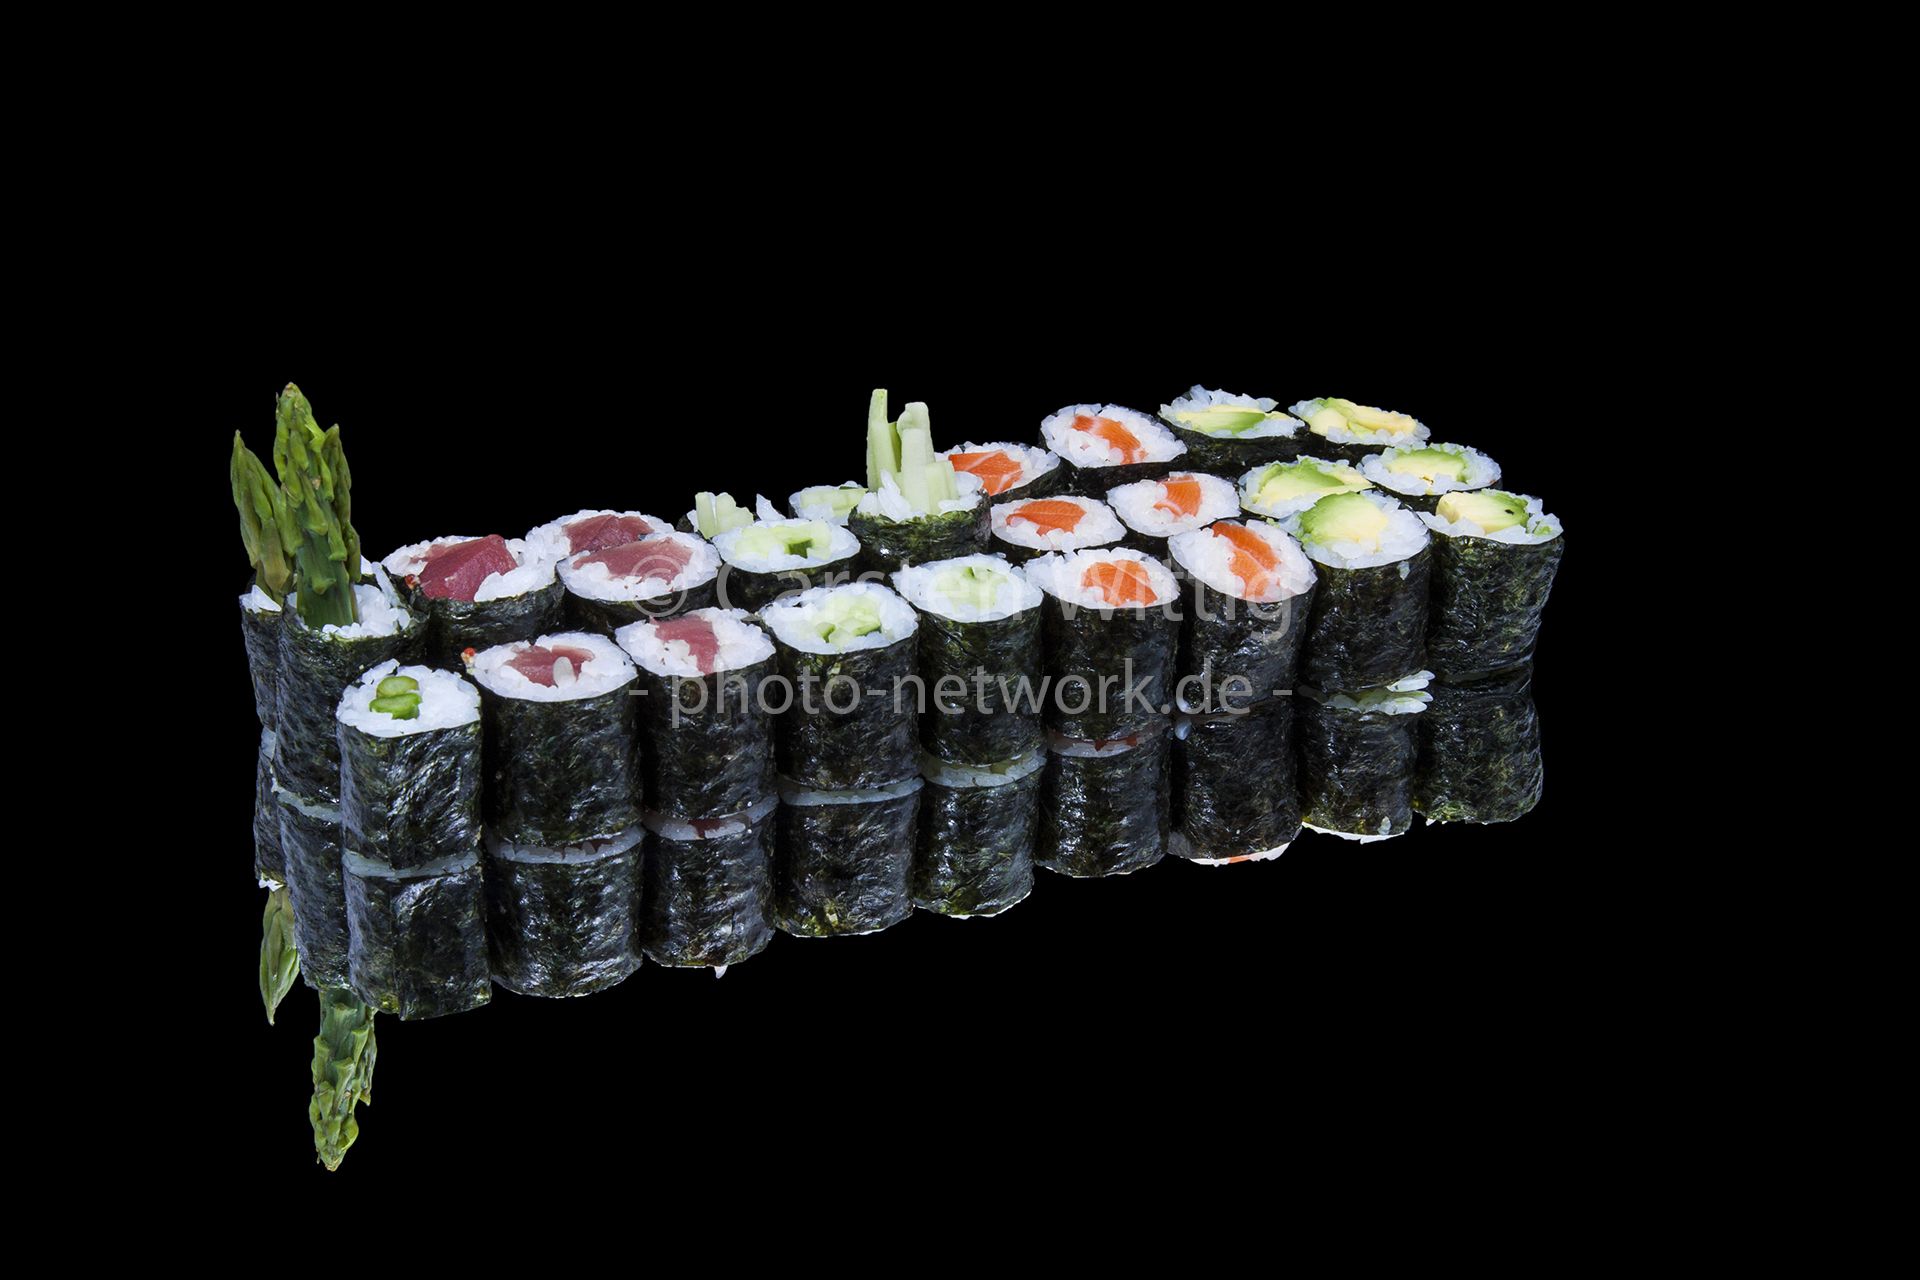 Sushi - Shiki I